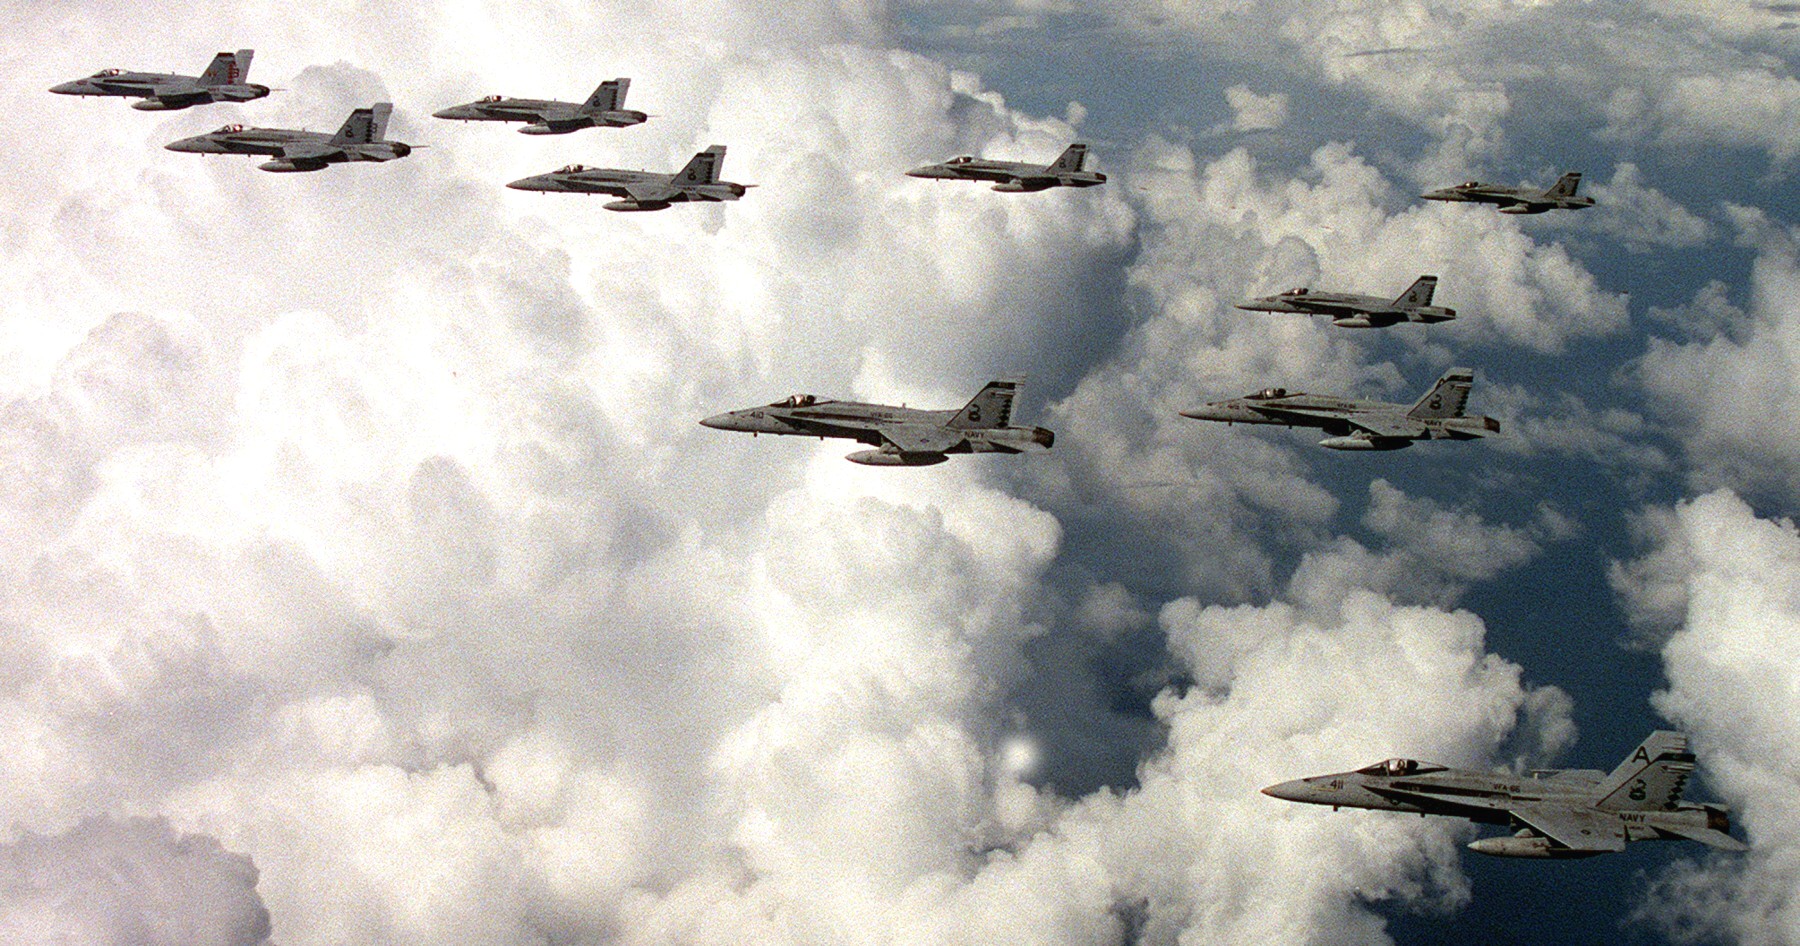 vfa-86 sidewinders strike fighter squadron f/a-18c hornet cvw-1 uss america cv-66 navy 126